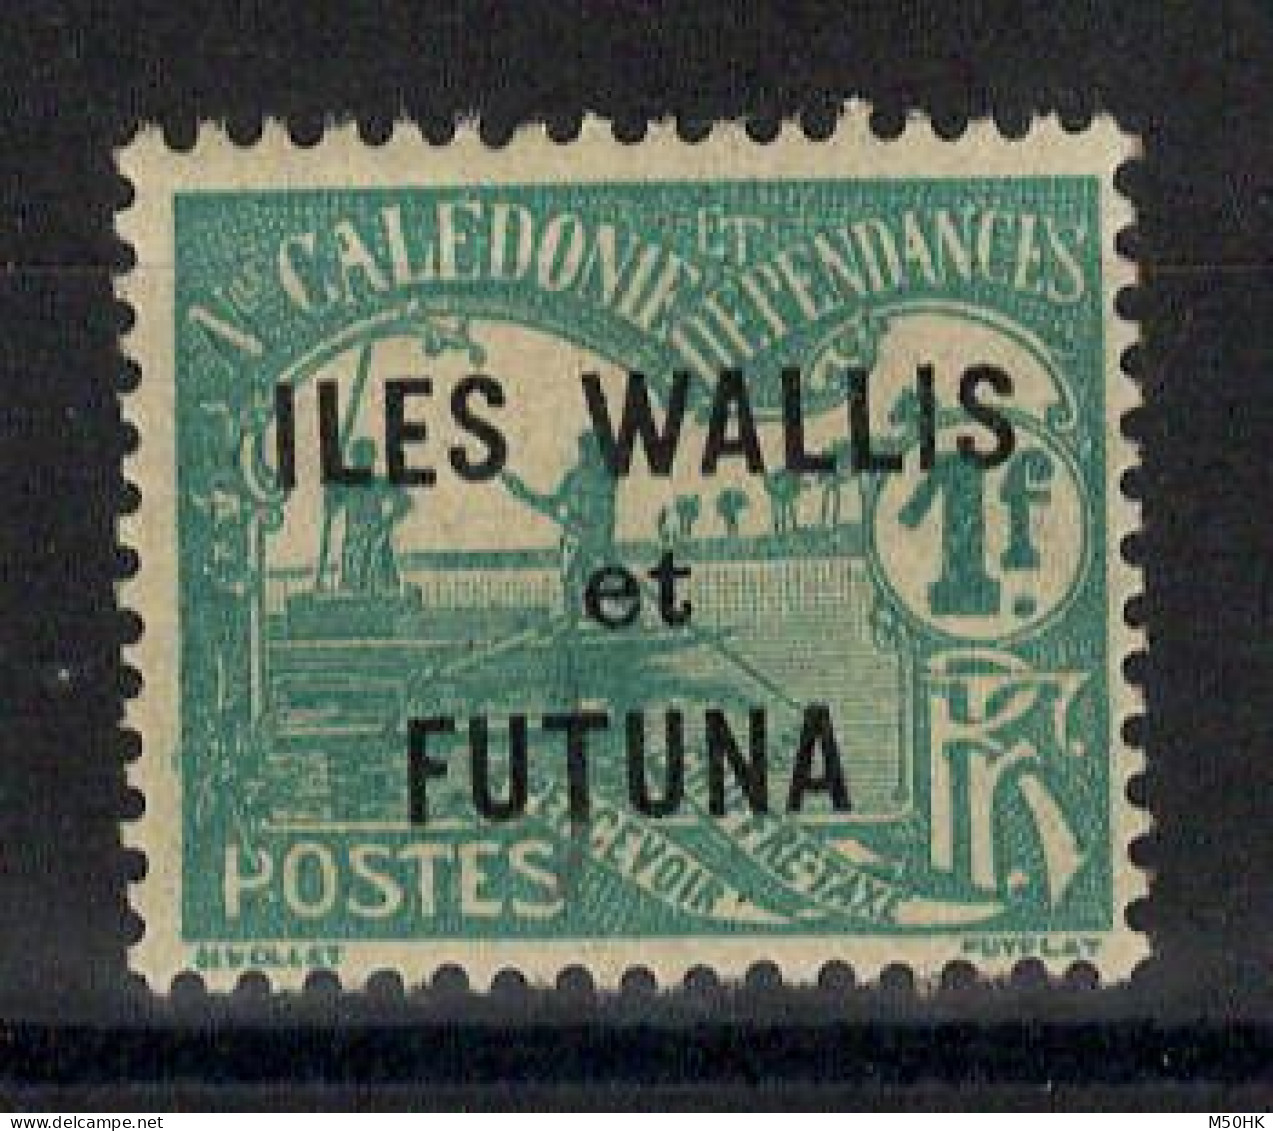 Wallis & Futuna - Taxe YV 8 N* MH - Segnatasse